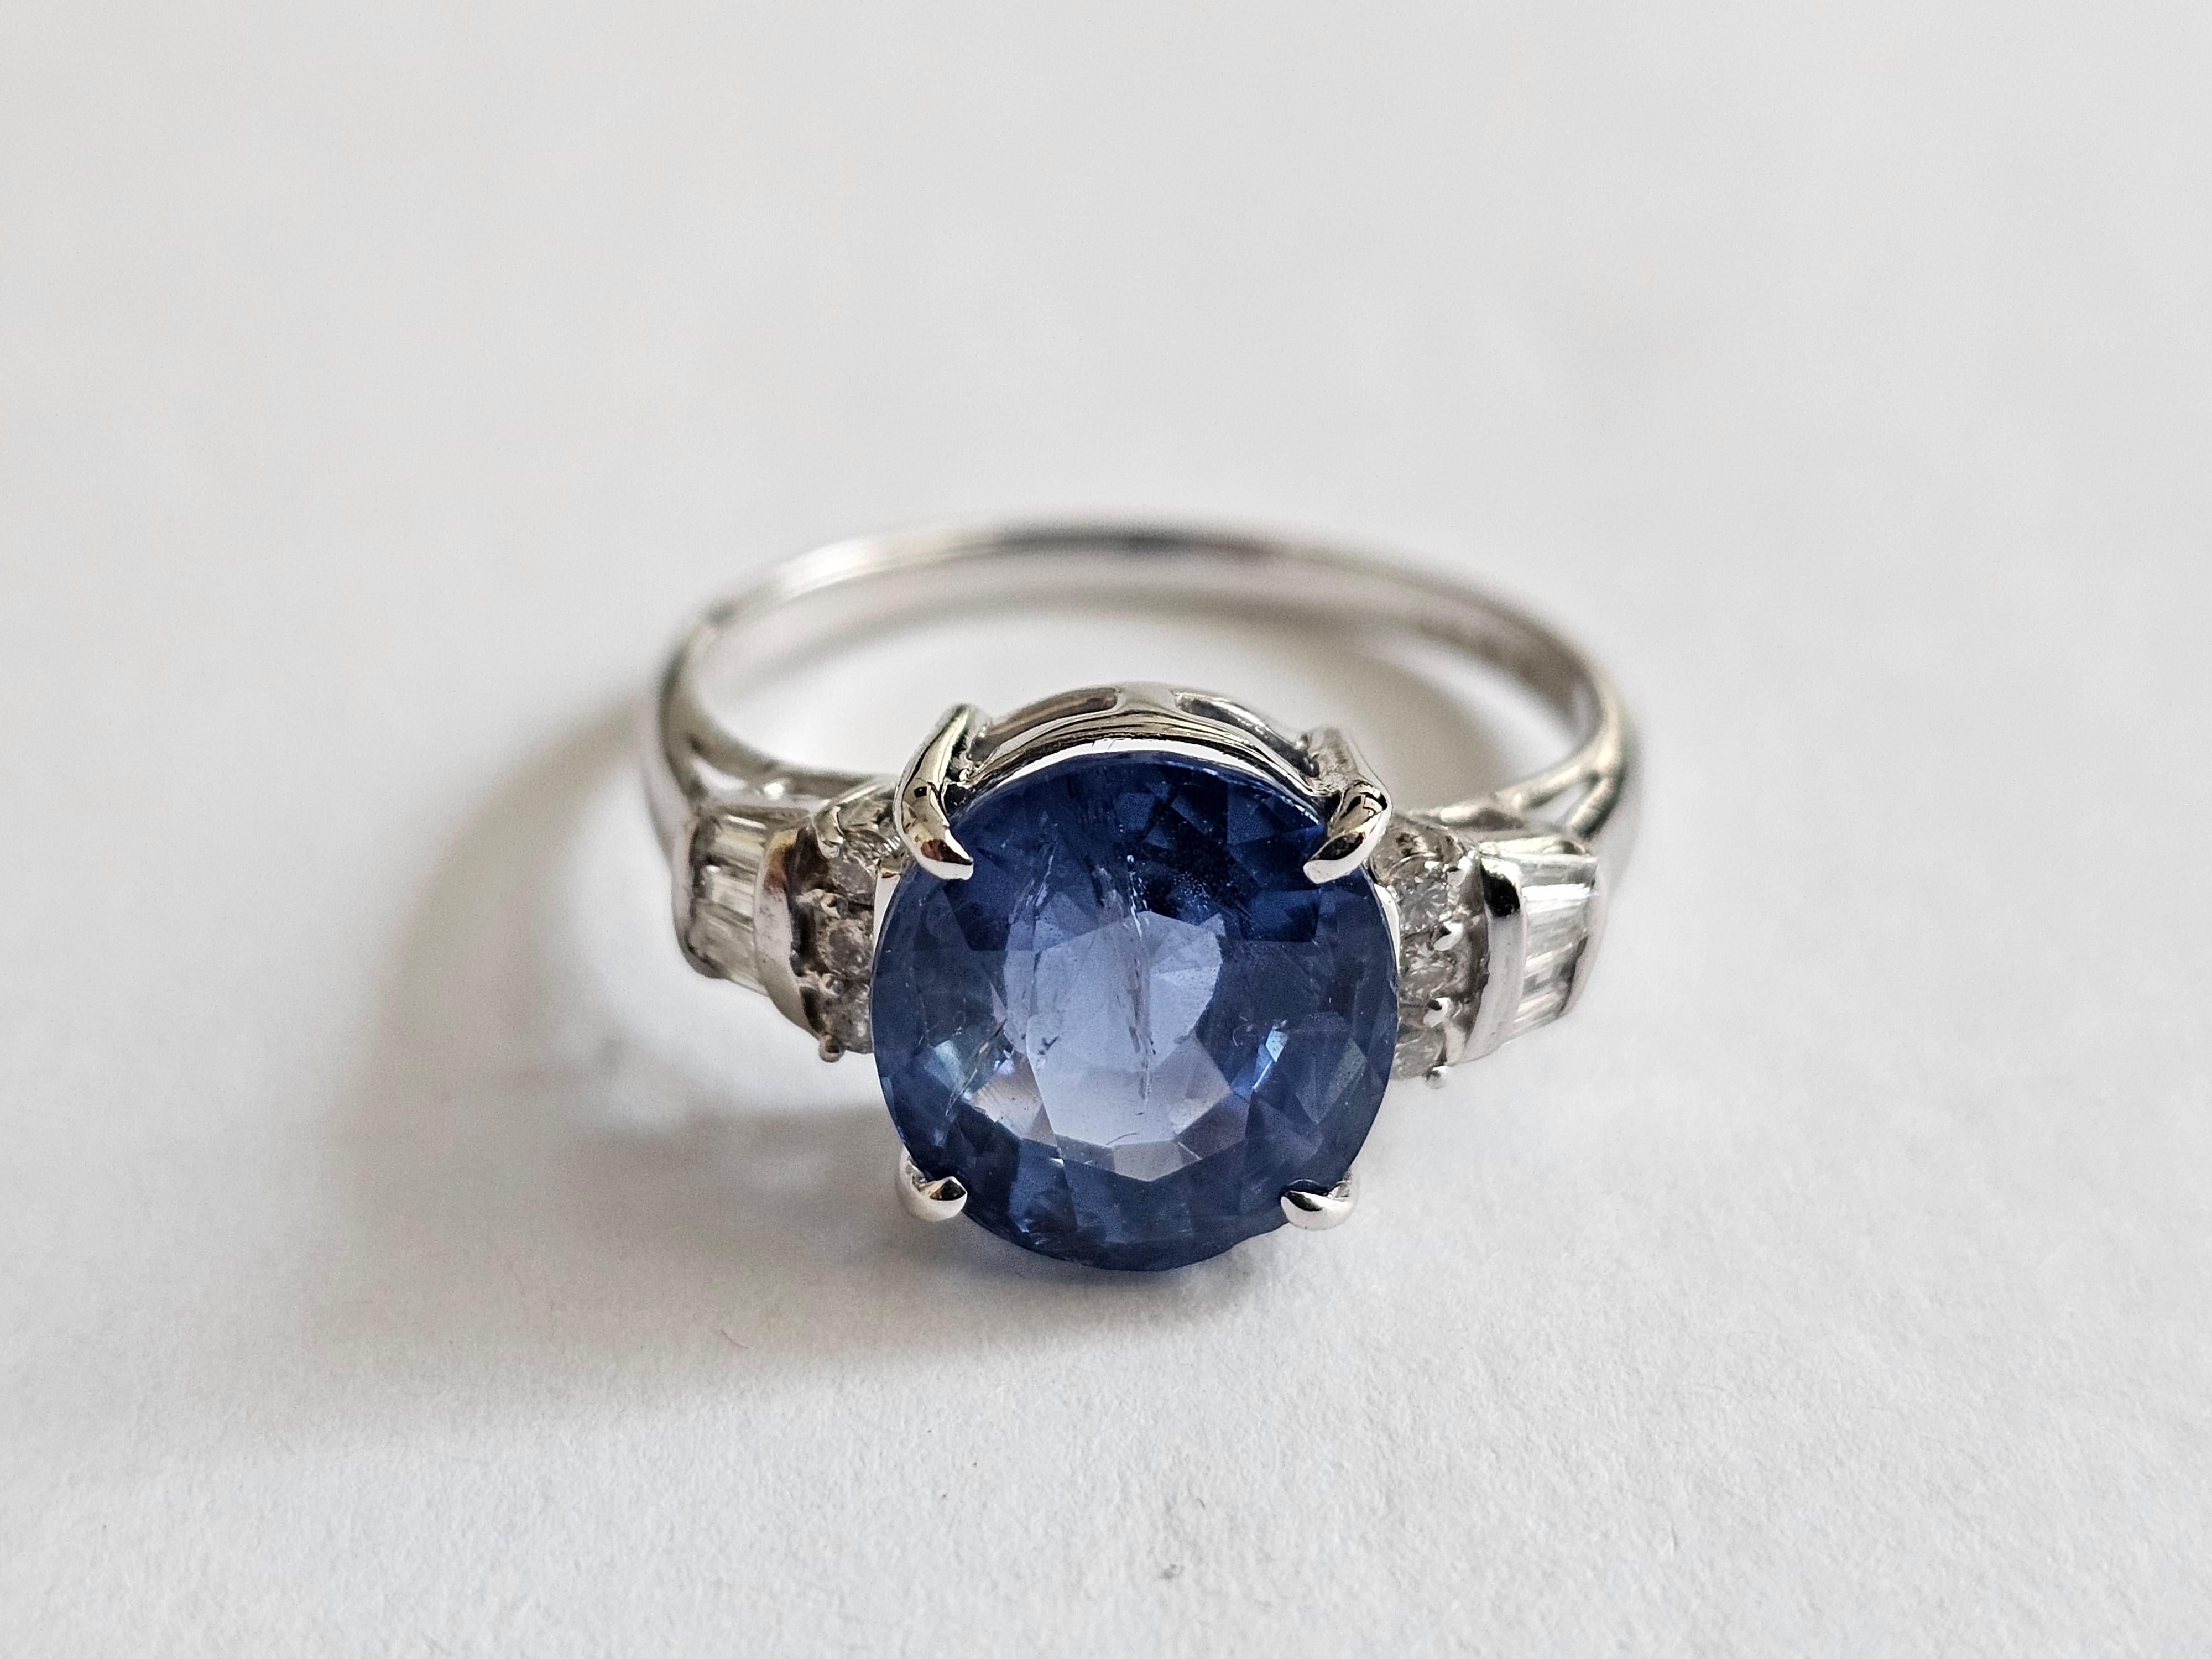 Made in Japan - Ceylon Blue Sapphire (4.526 cts.) Statement Ring with 18K White Gold and White VS-SI Diamonds (Size 7)

Center Stone:

4.526 cts Oval Shape Ceylon Sapphire - Vivid Cornflower Blue CGL UDC0902

Side Diamonds:

White Diamonds 0.16 cts